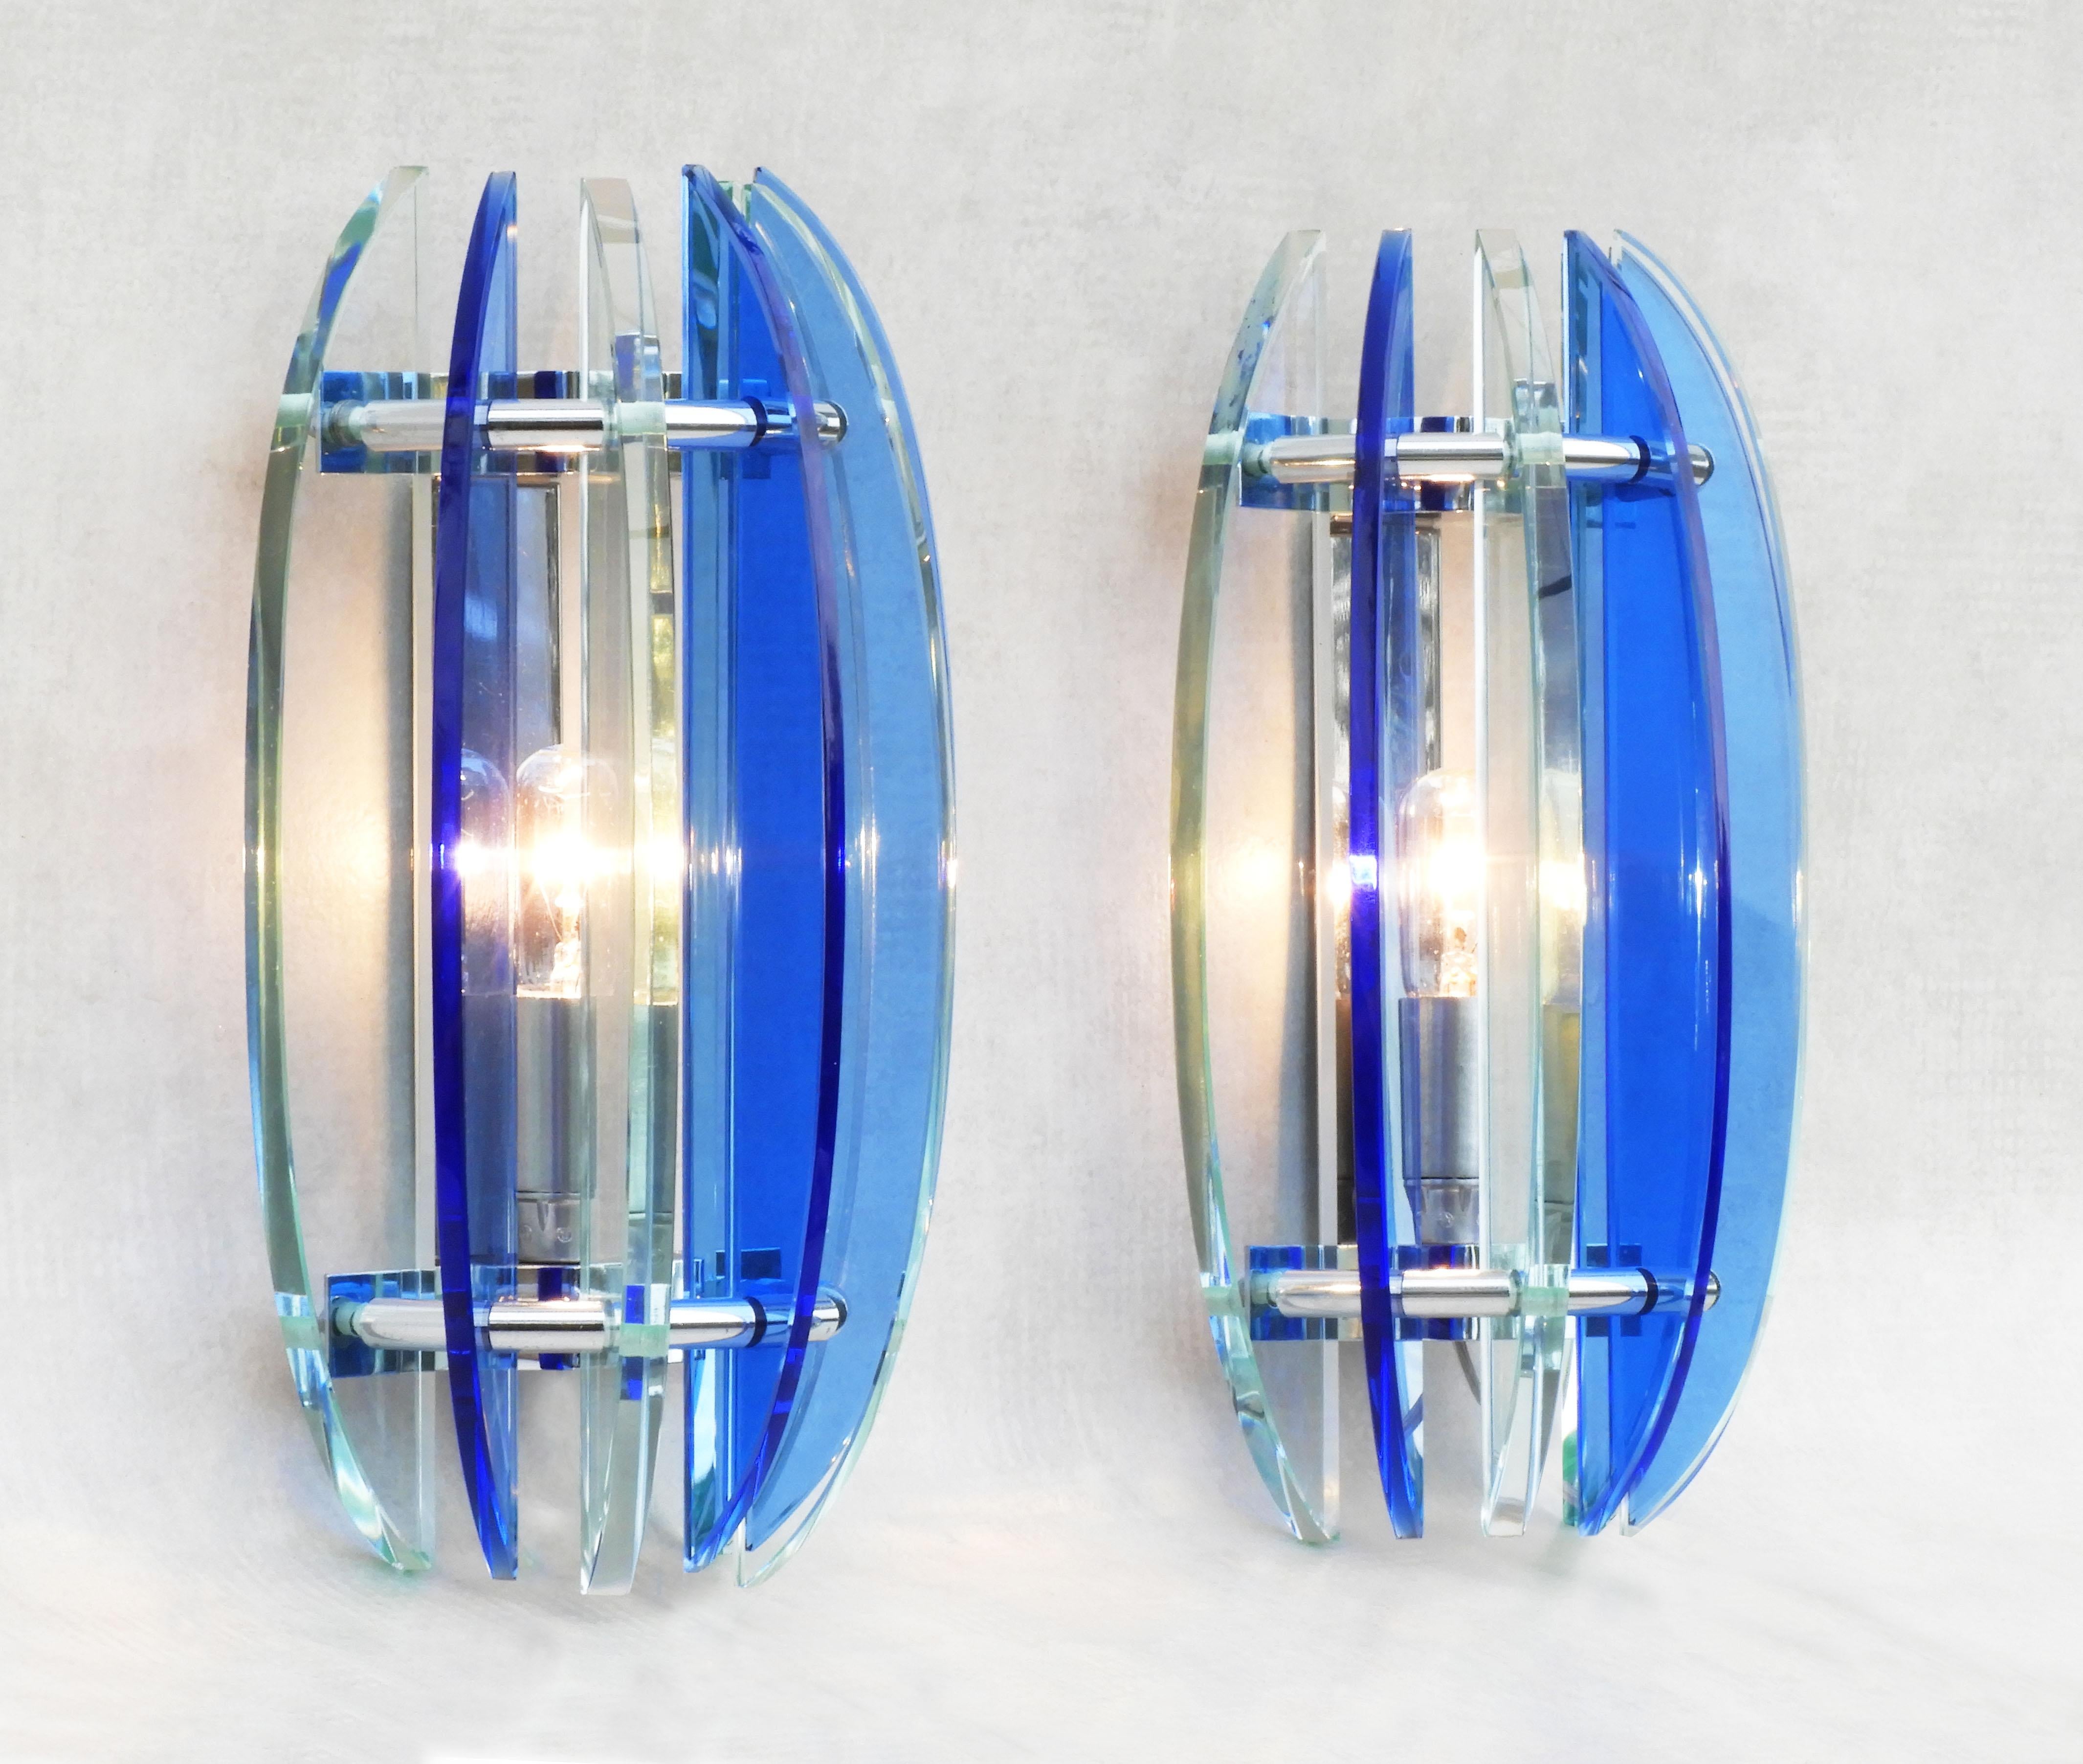 Beveled Pair of Italian Glass Wall Light Sconces by VECA Italy, C1970